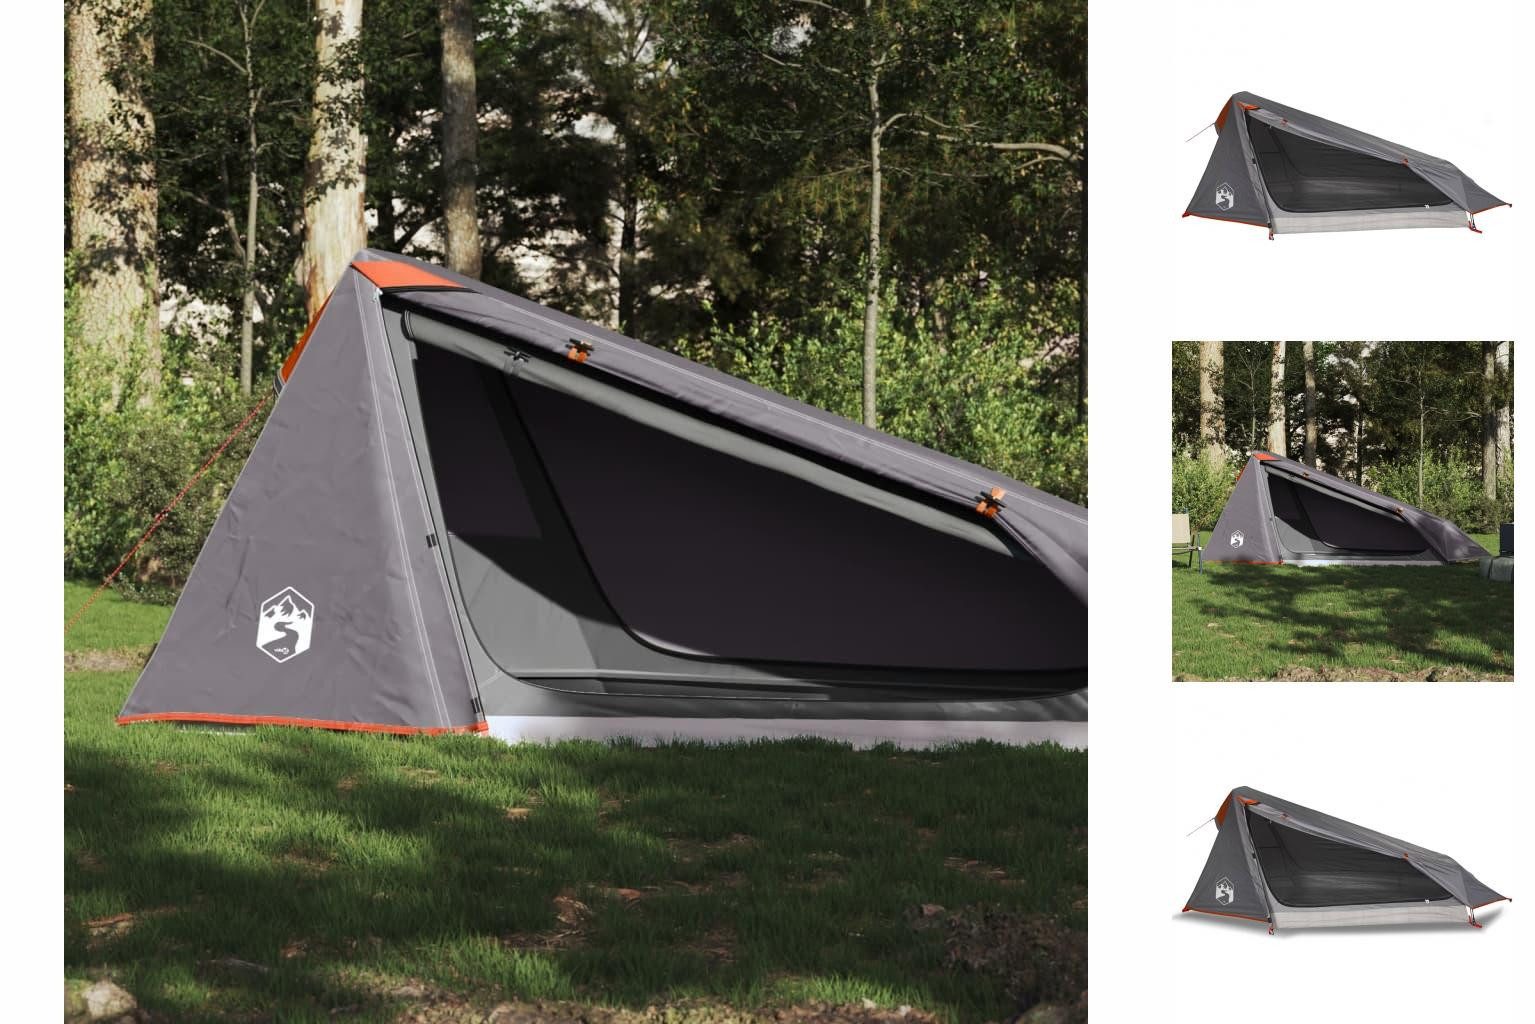 vidaXL Kuppelzelt Zelt Campingzelt Tunnelzelt 1 Person Grau und Orange Wasserdicht